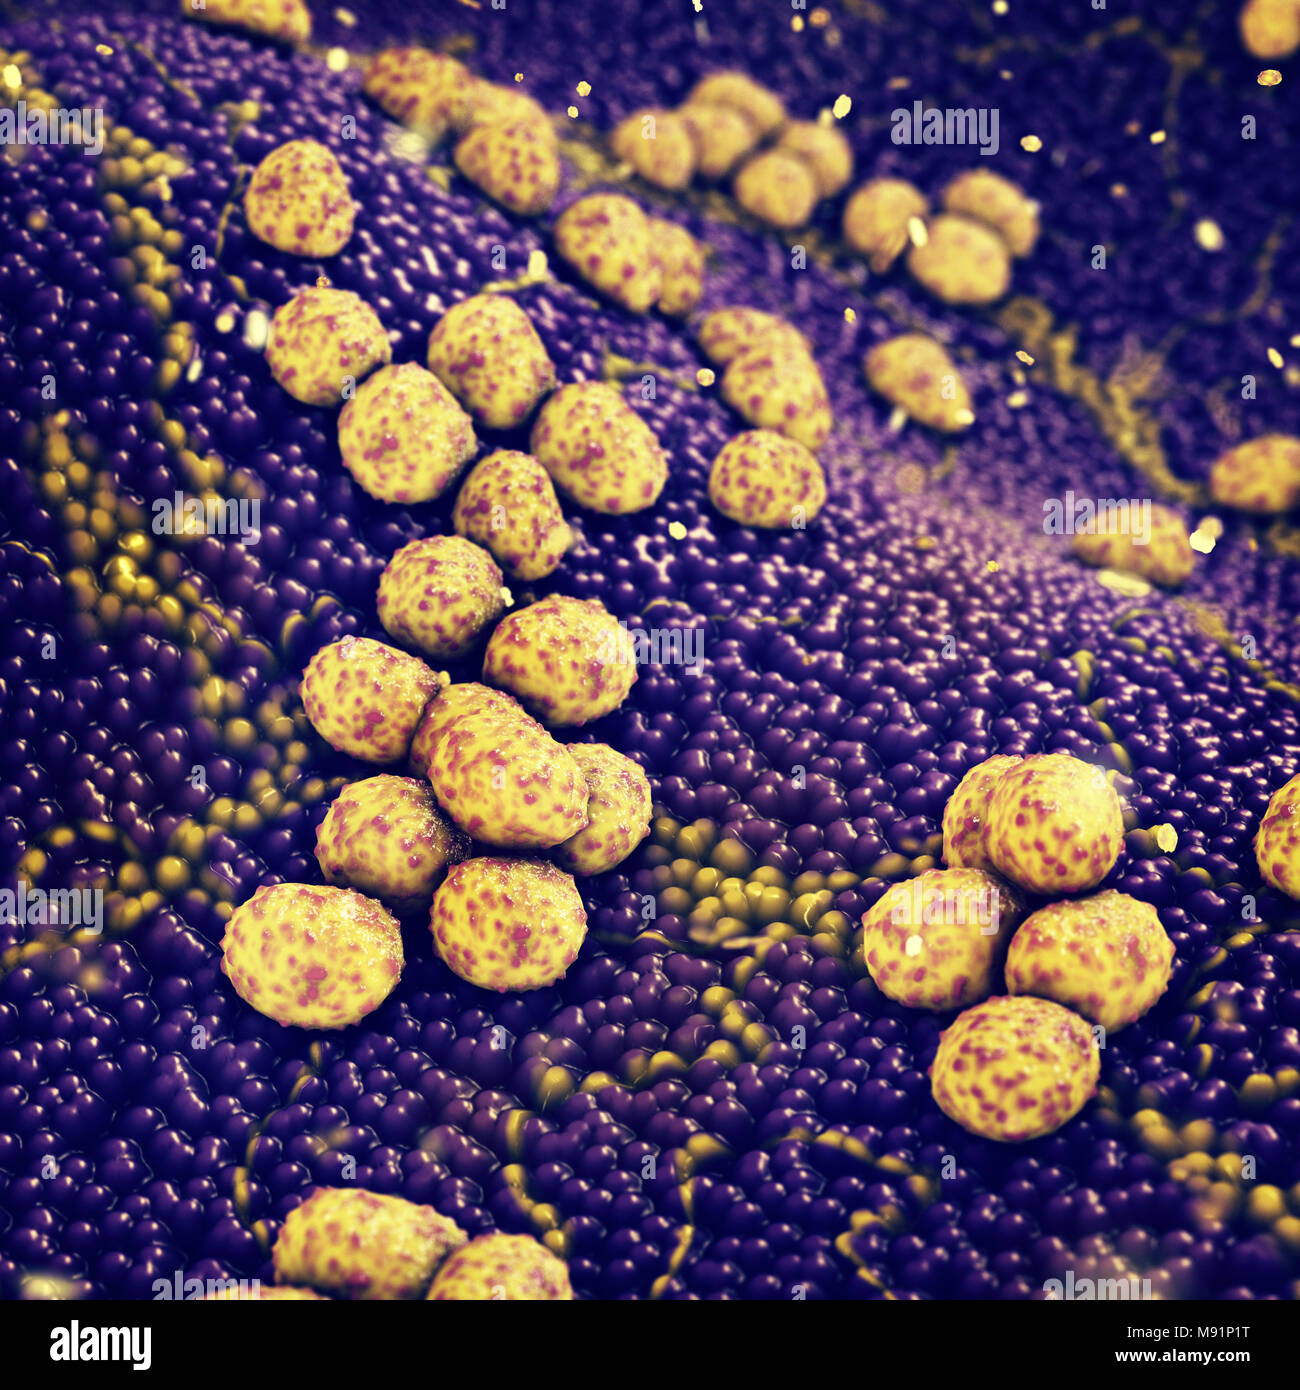 Colony of Staphylococcus aureus bacteria causing skin infection, Antibiotic resistant infectious diseases Stock Photo